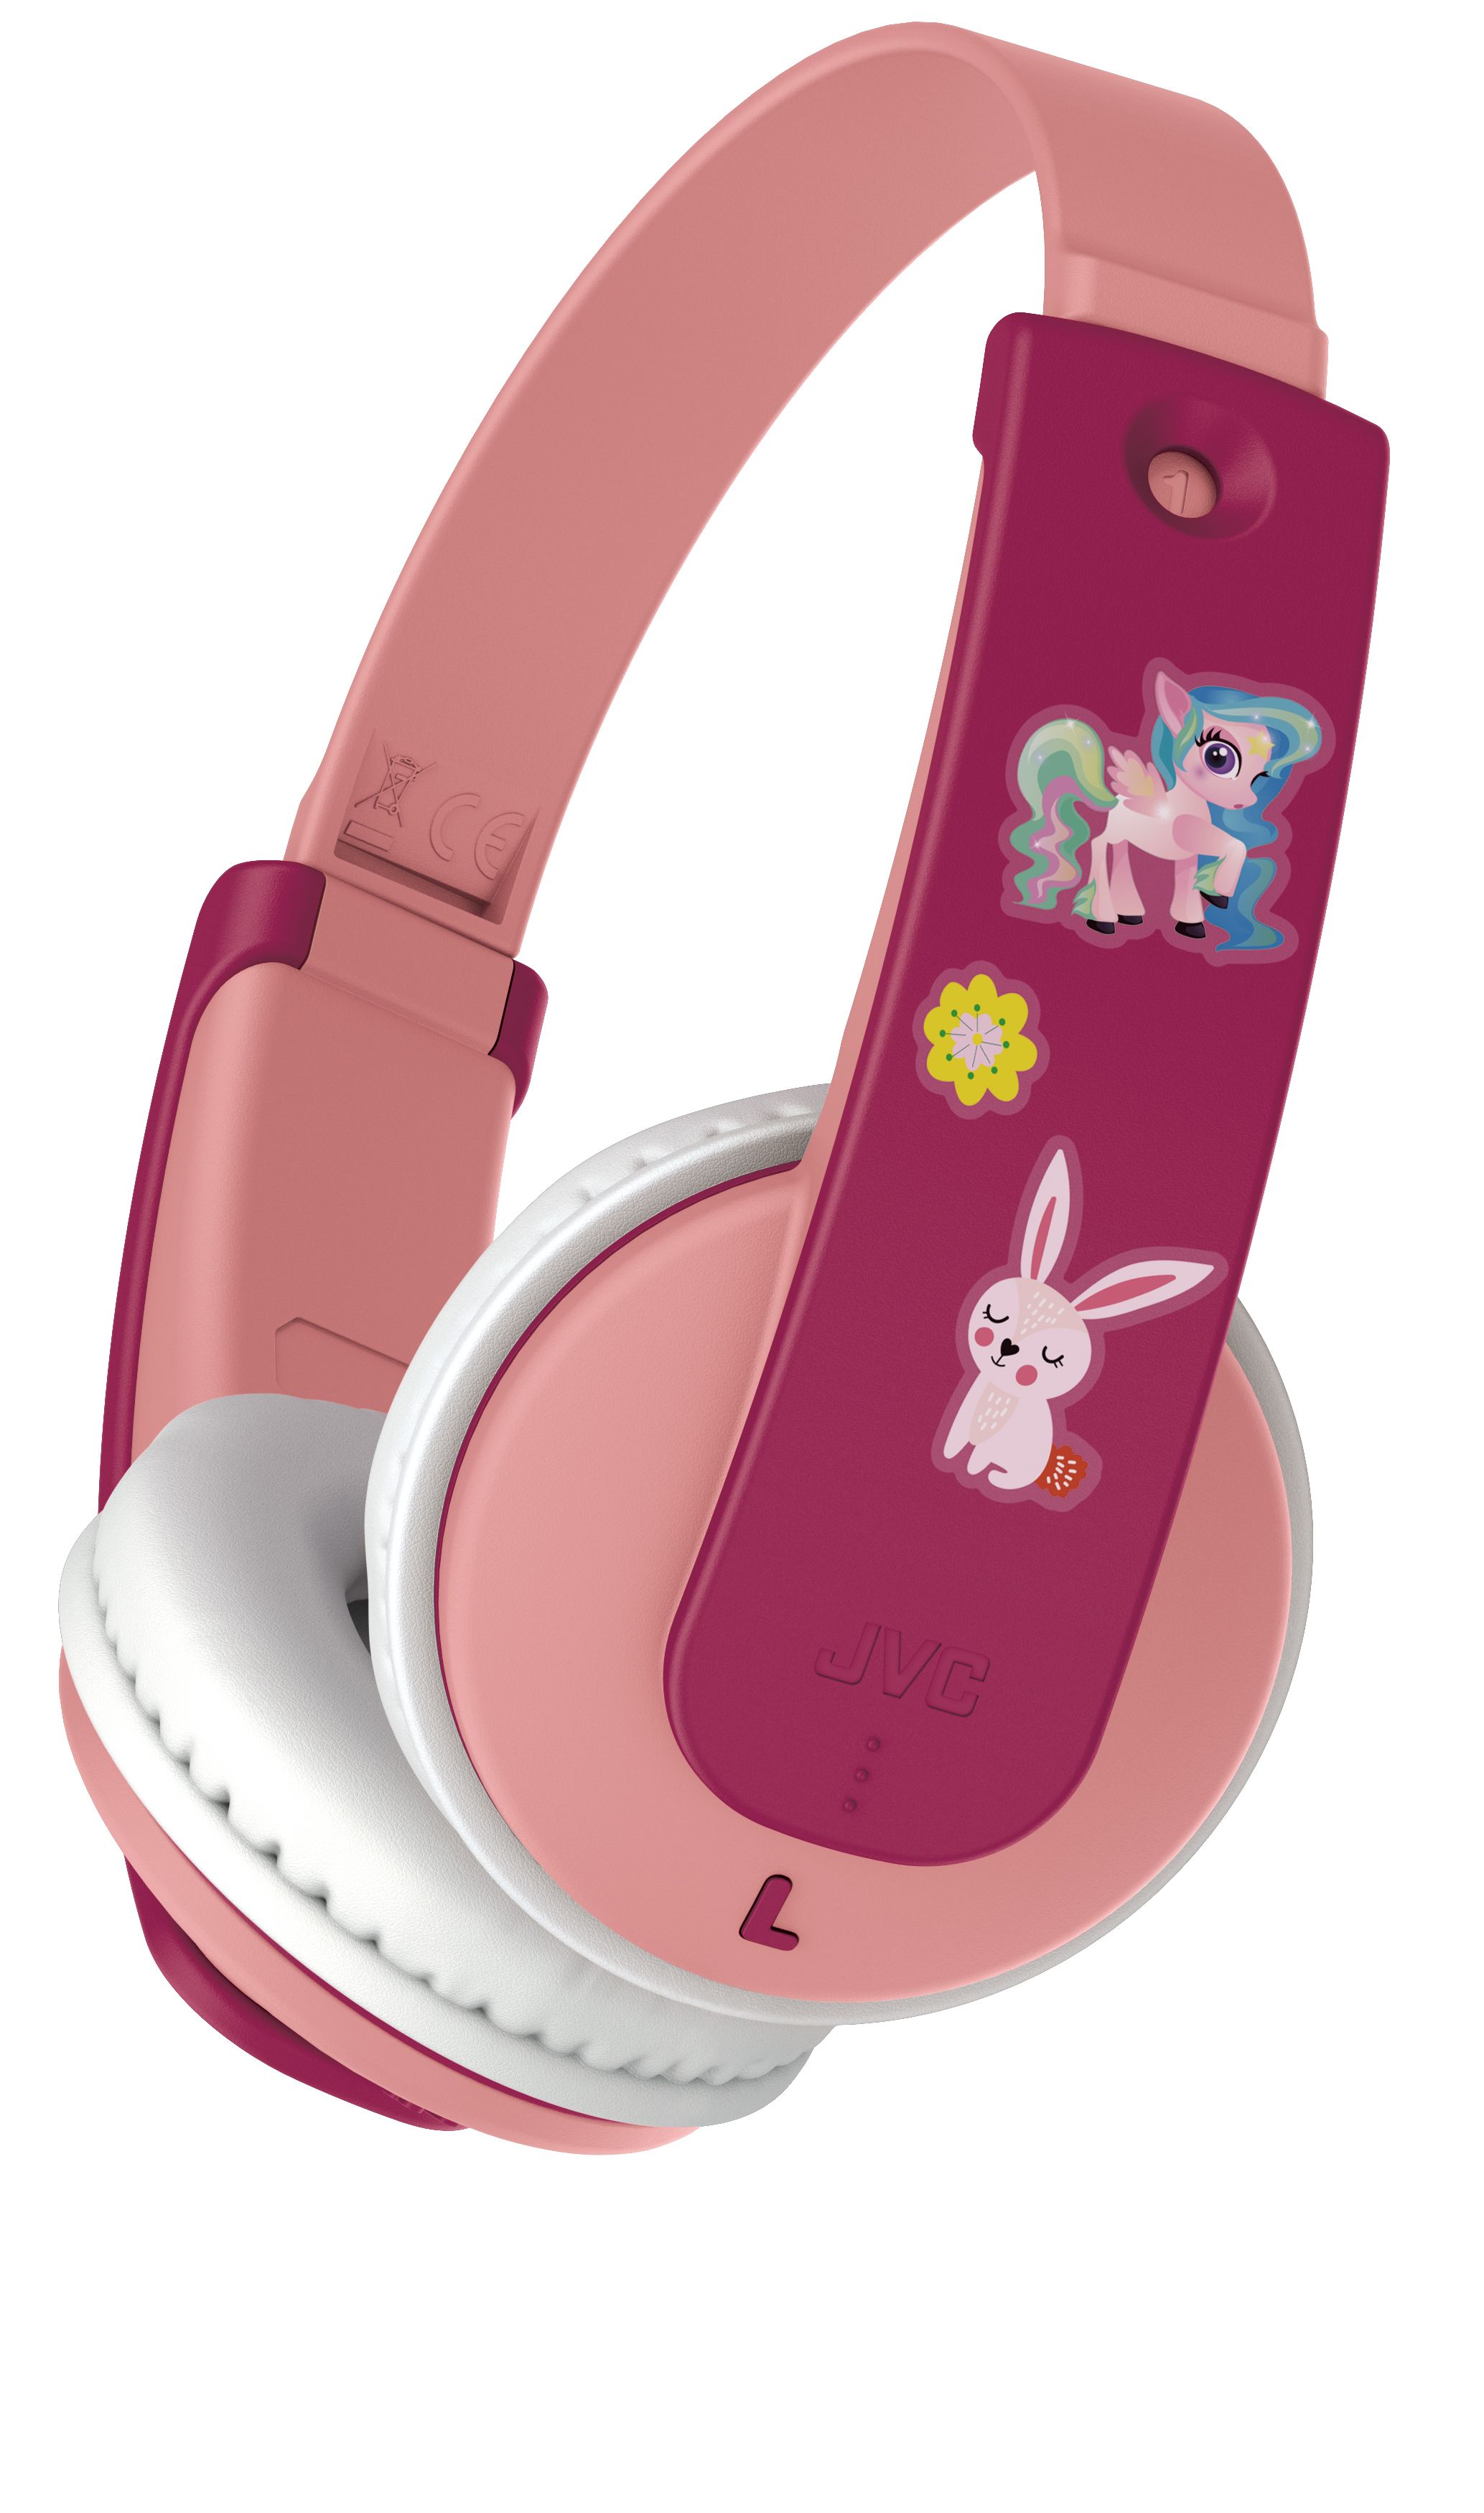 Tinyphones On-Ear Wireless Barnhörlurar rosa